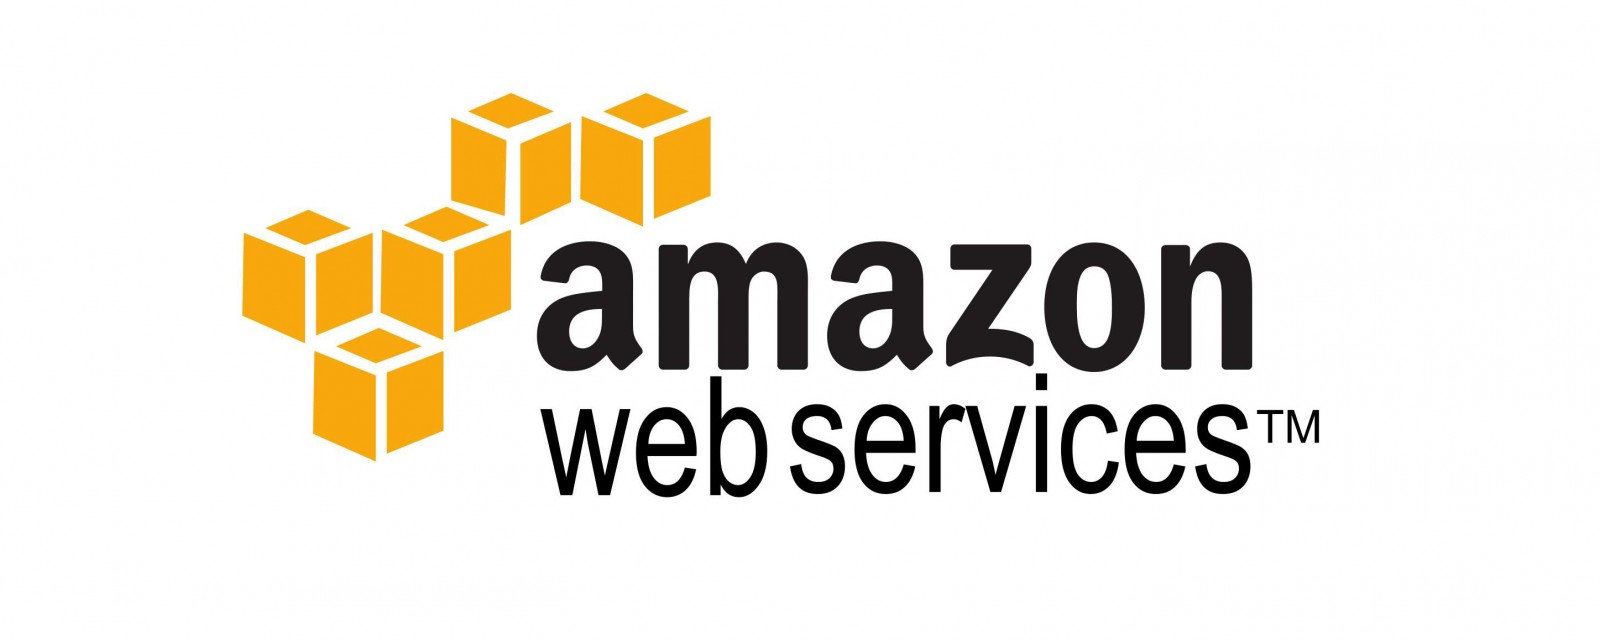 AWS Amazon Web services logo 1